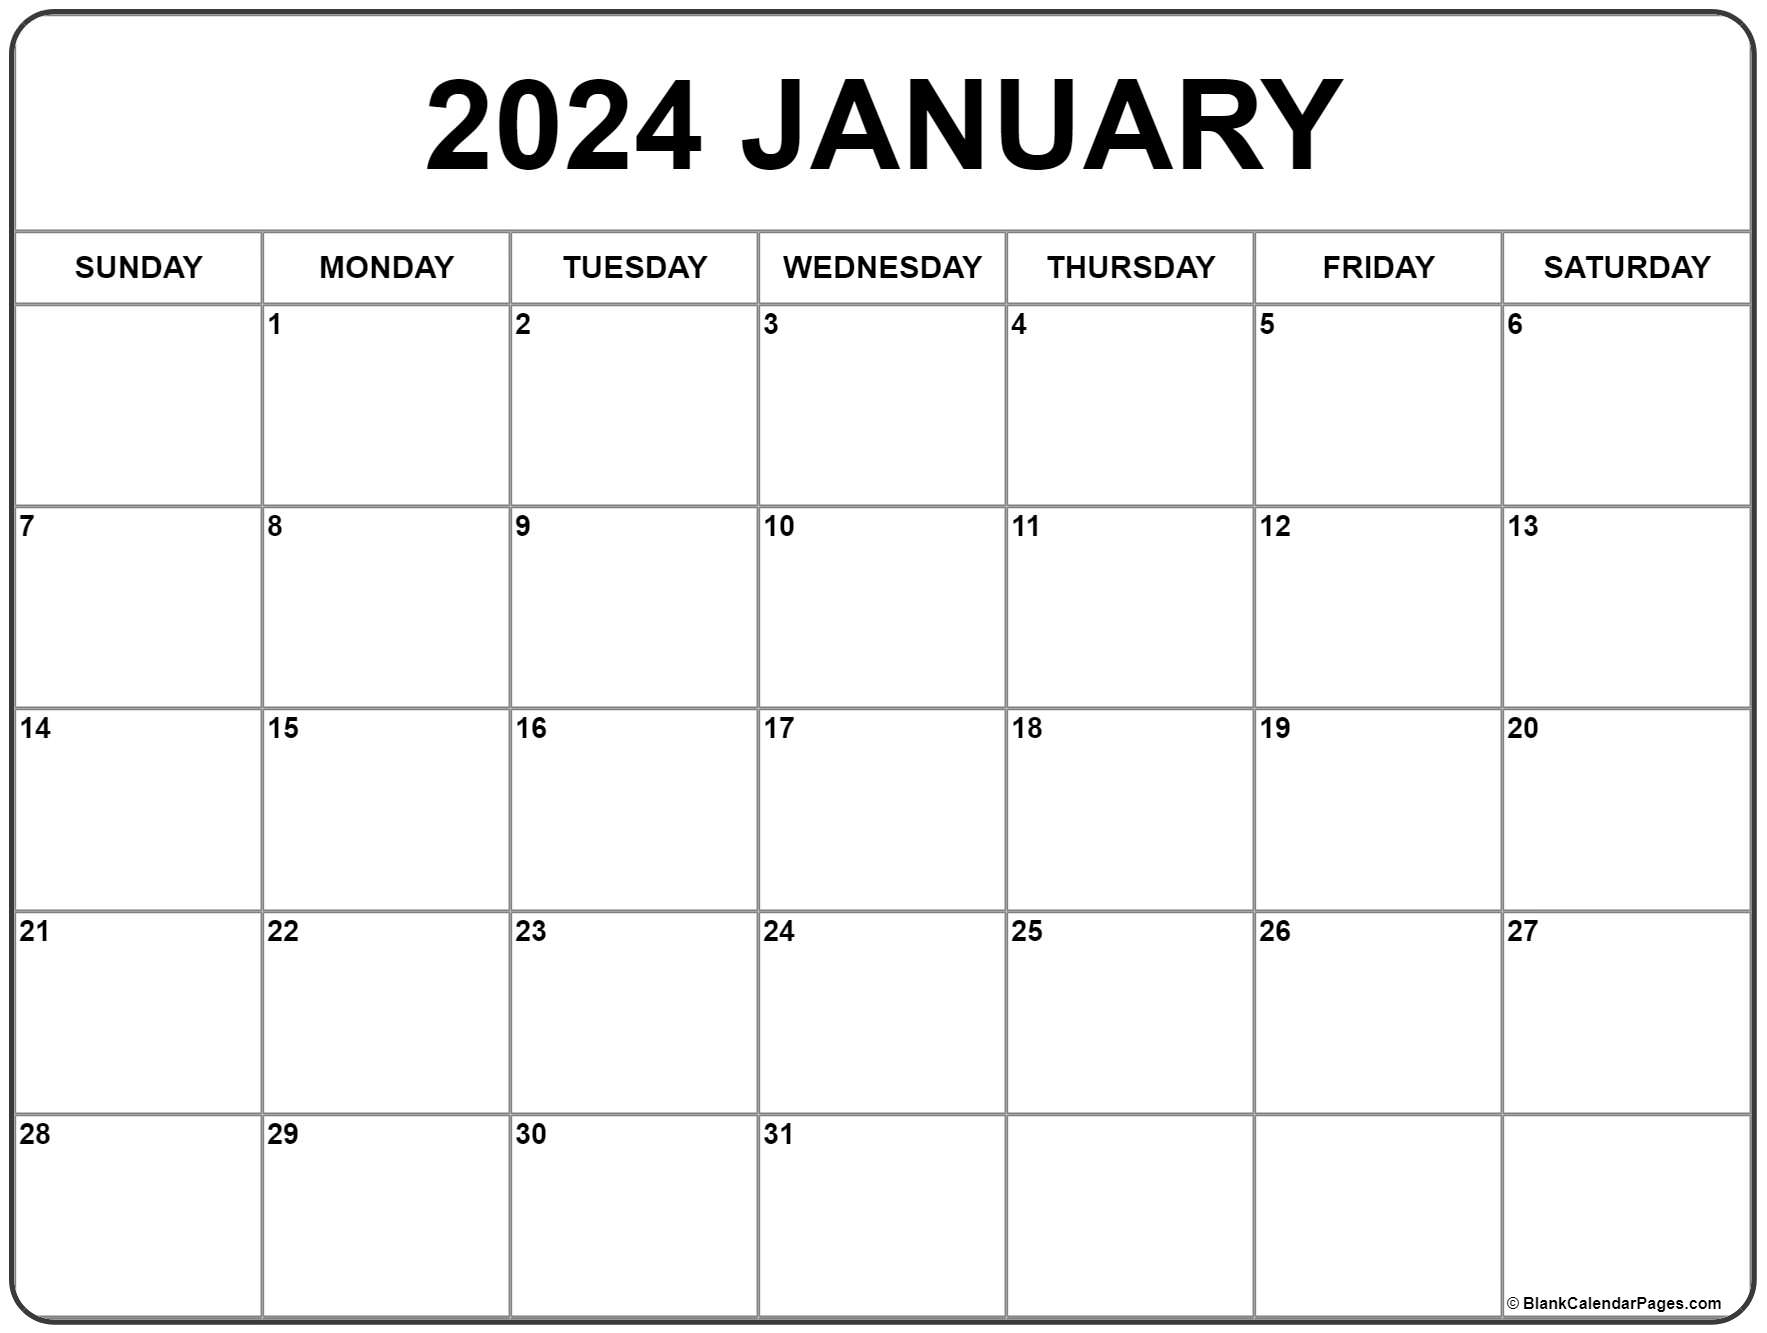 January 2024 Calendar | Free Printable Calendar | Printable Monthly Calendar 2024